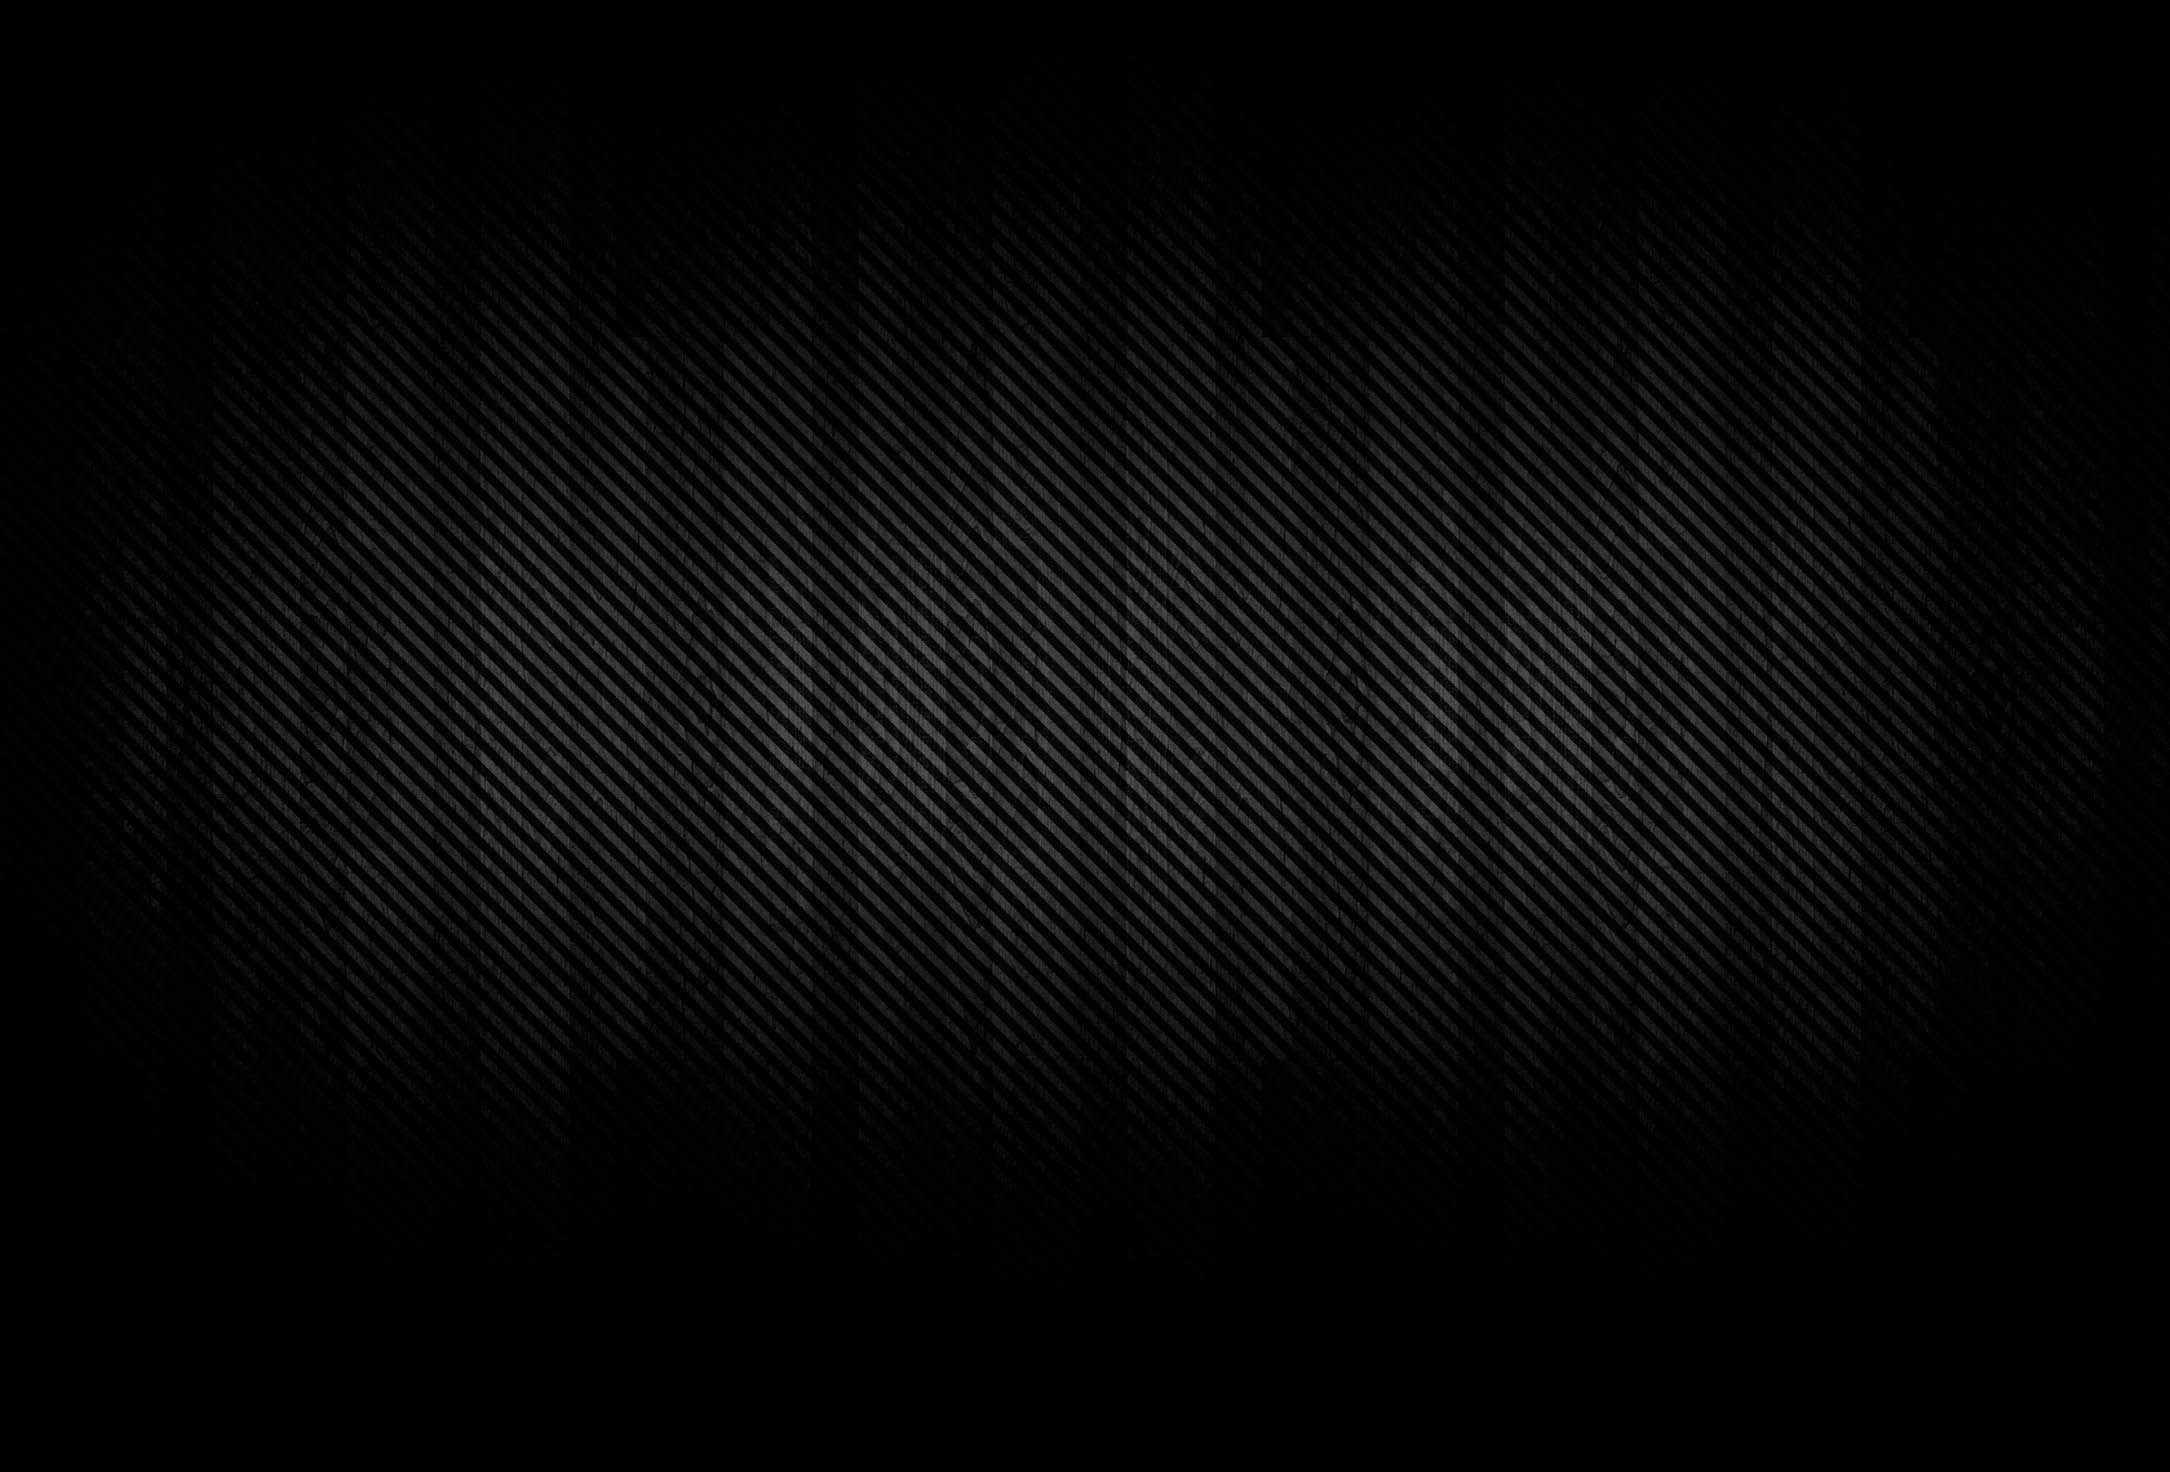 2170x1472 ... The Dos and Don'ts of Dark Web Design | Webdesigner Depot 45 Latest Black  Background ...